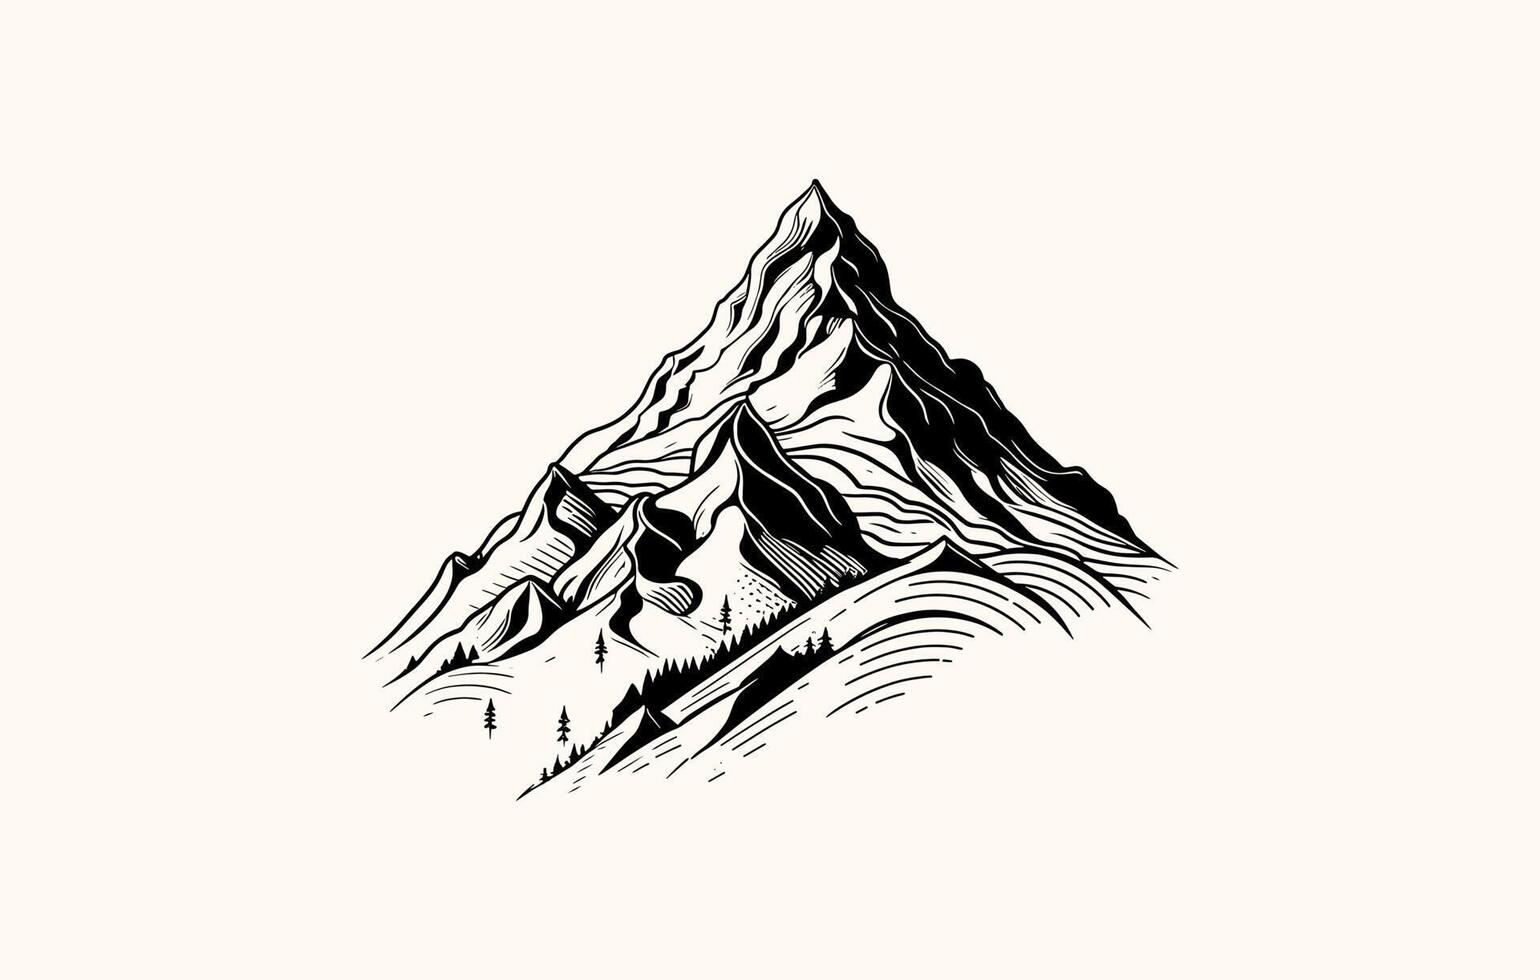 Mountain Silhouette VectormMountain vector,Mountain illustration vector